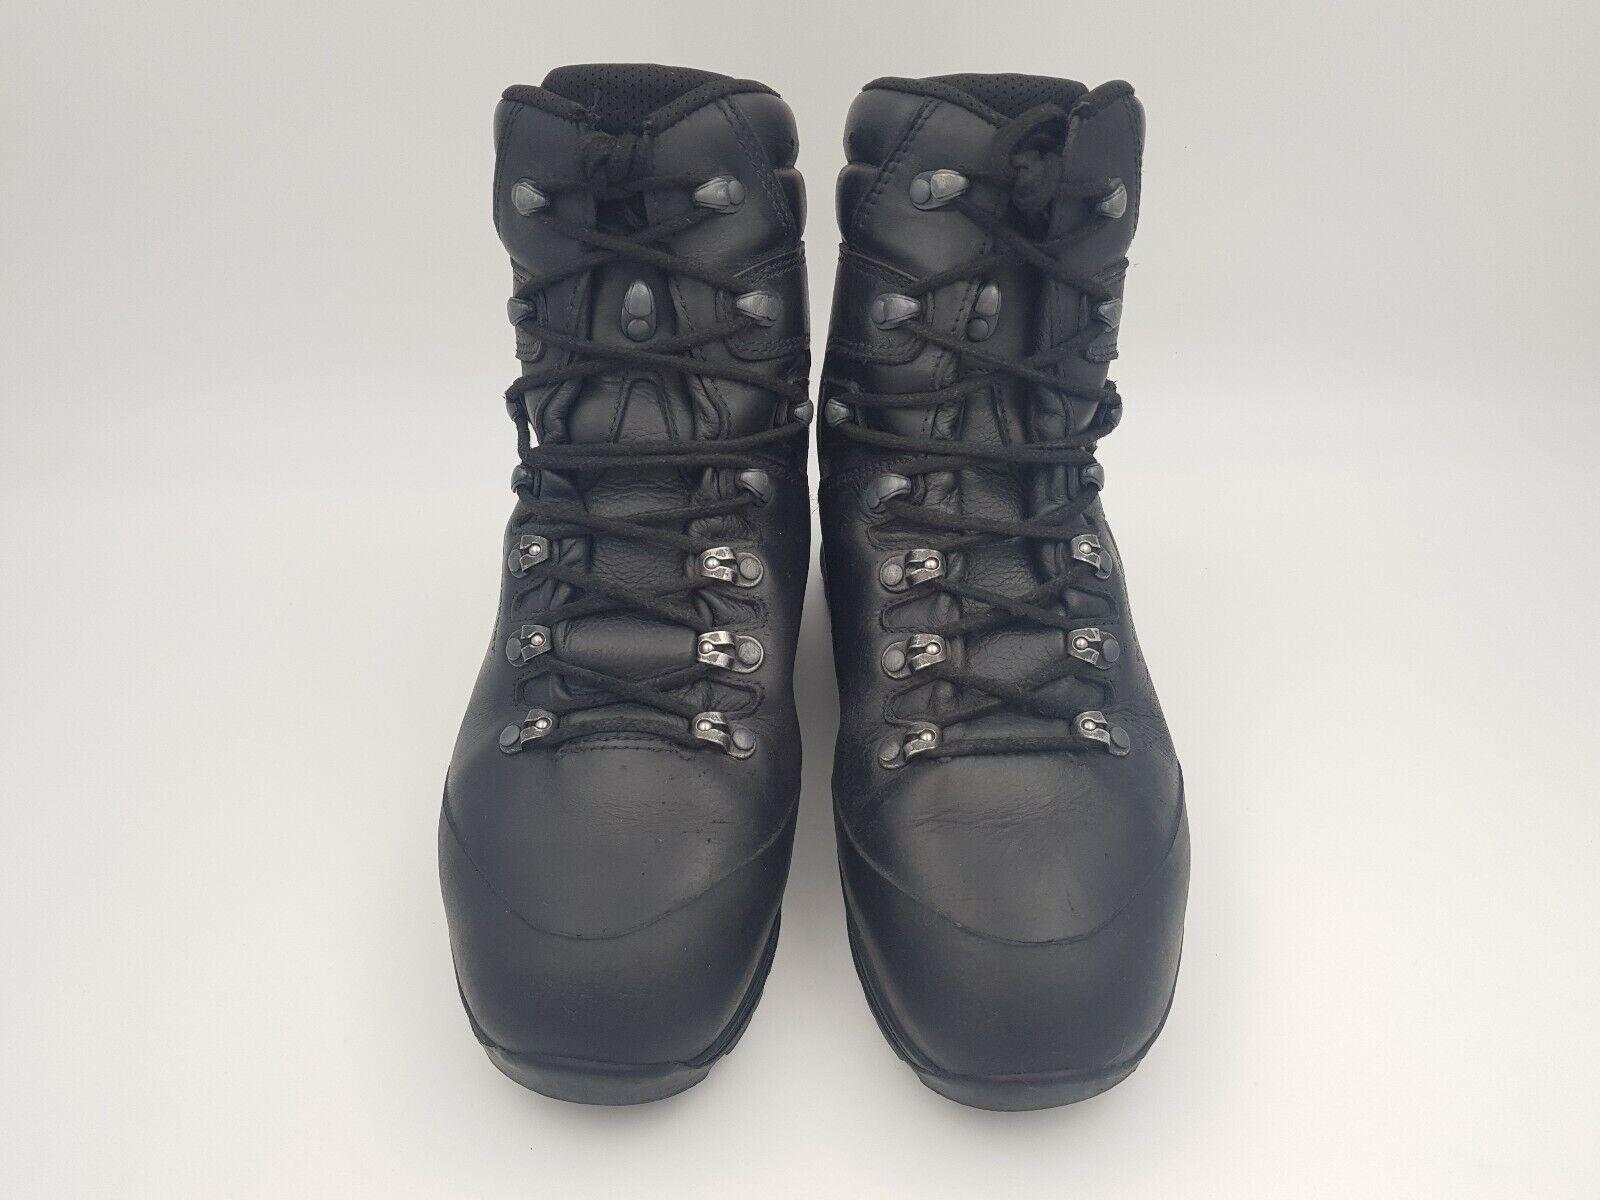 Haix Black Combat Boots Grade 1 (Used)